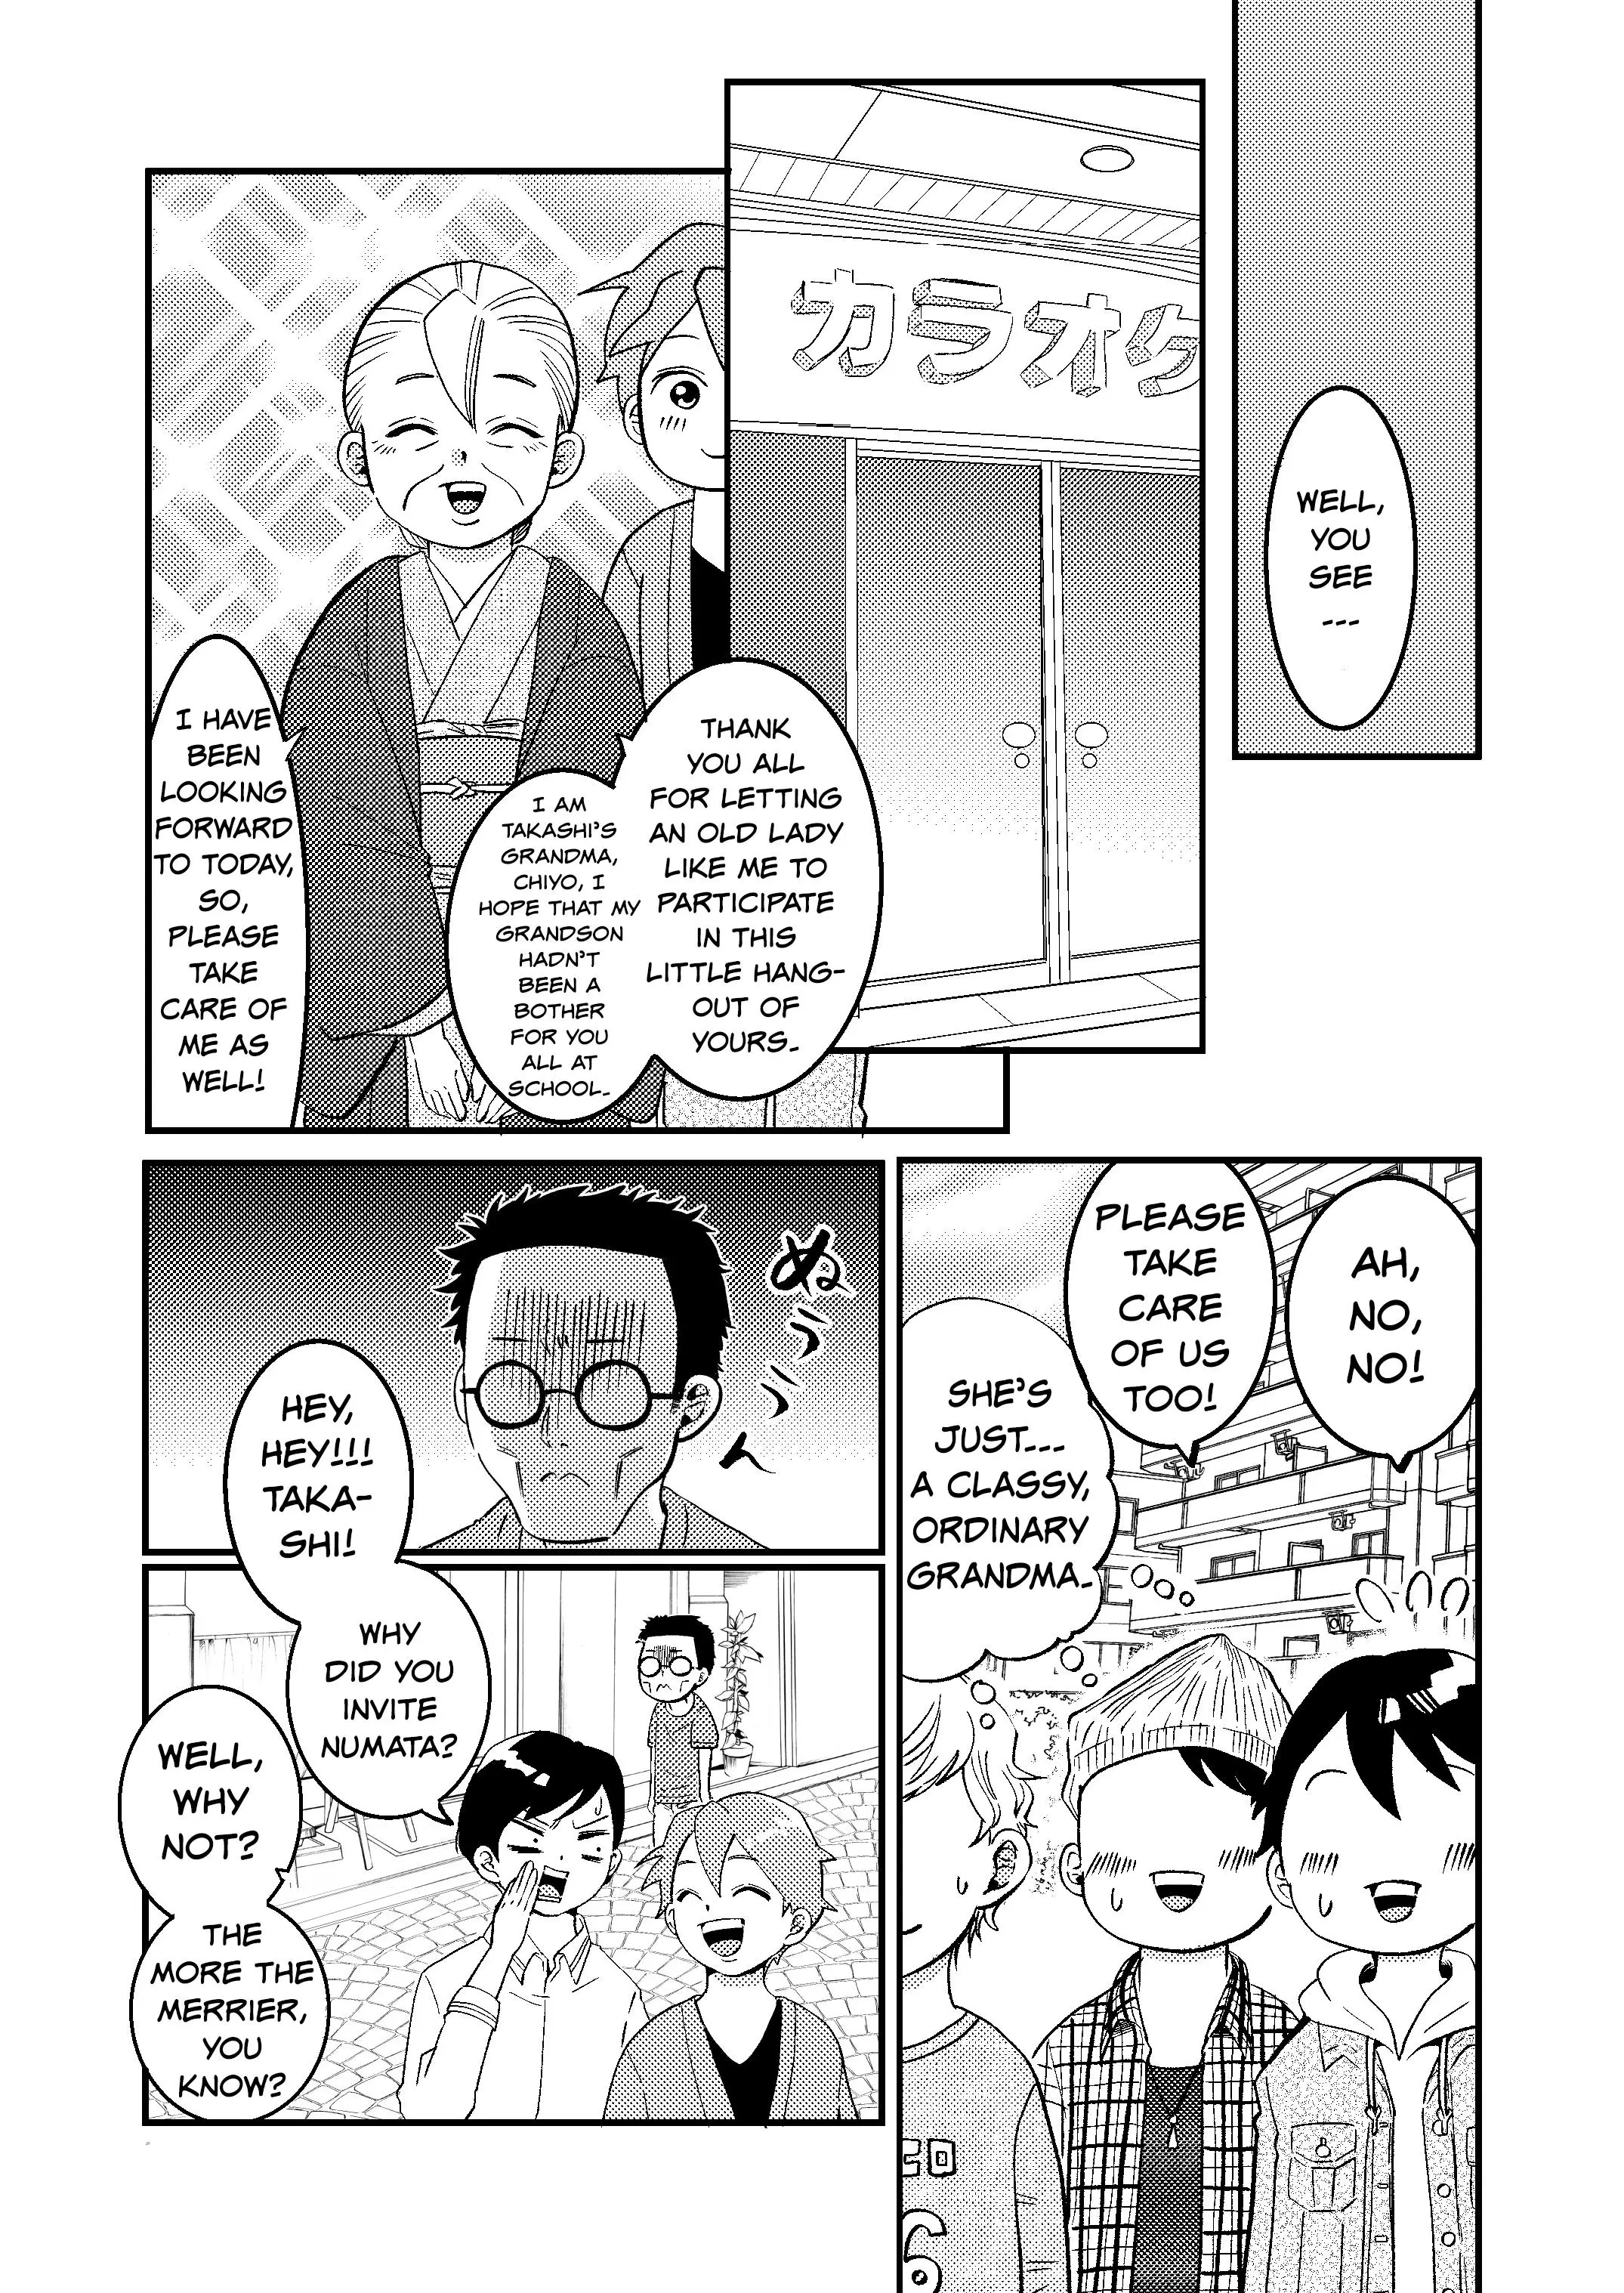 Otaku Grandma - 8 page 4-689ecf51